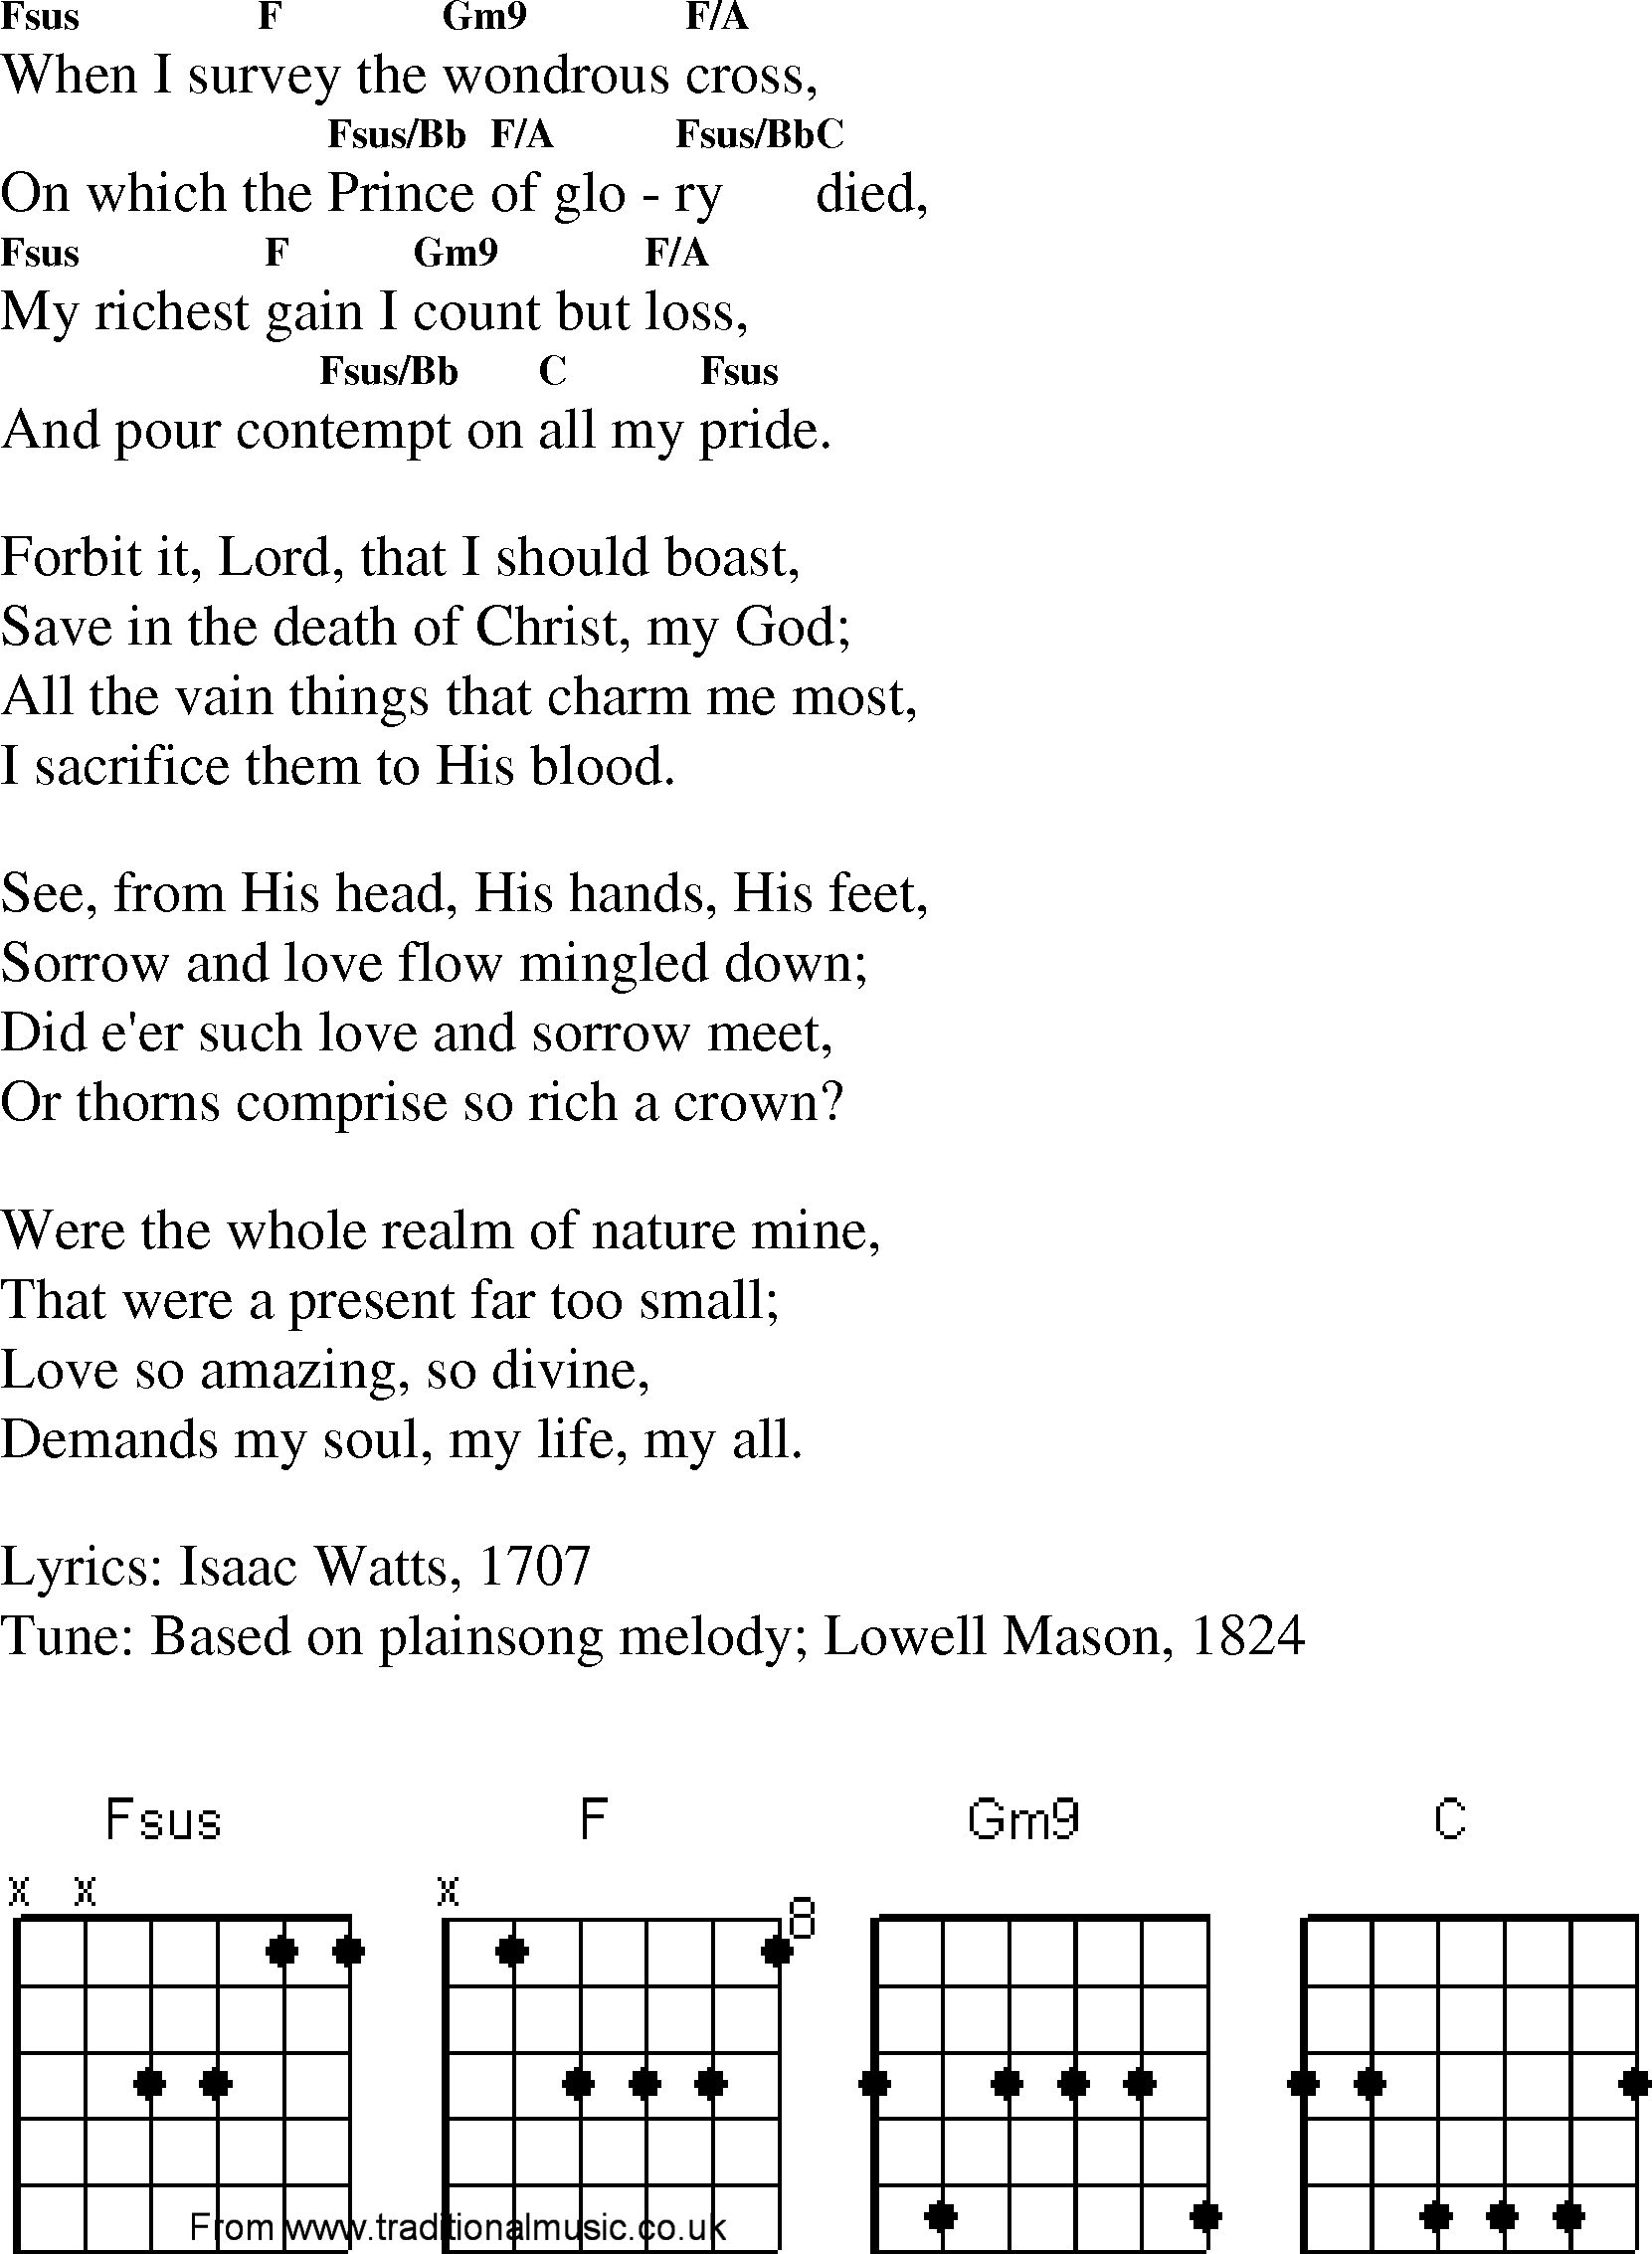 Gospel Song: when_i_survey_the_wondrous_cross, lyrics and chords.